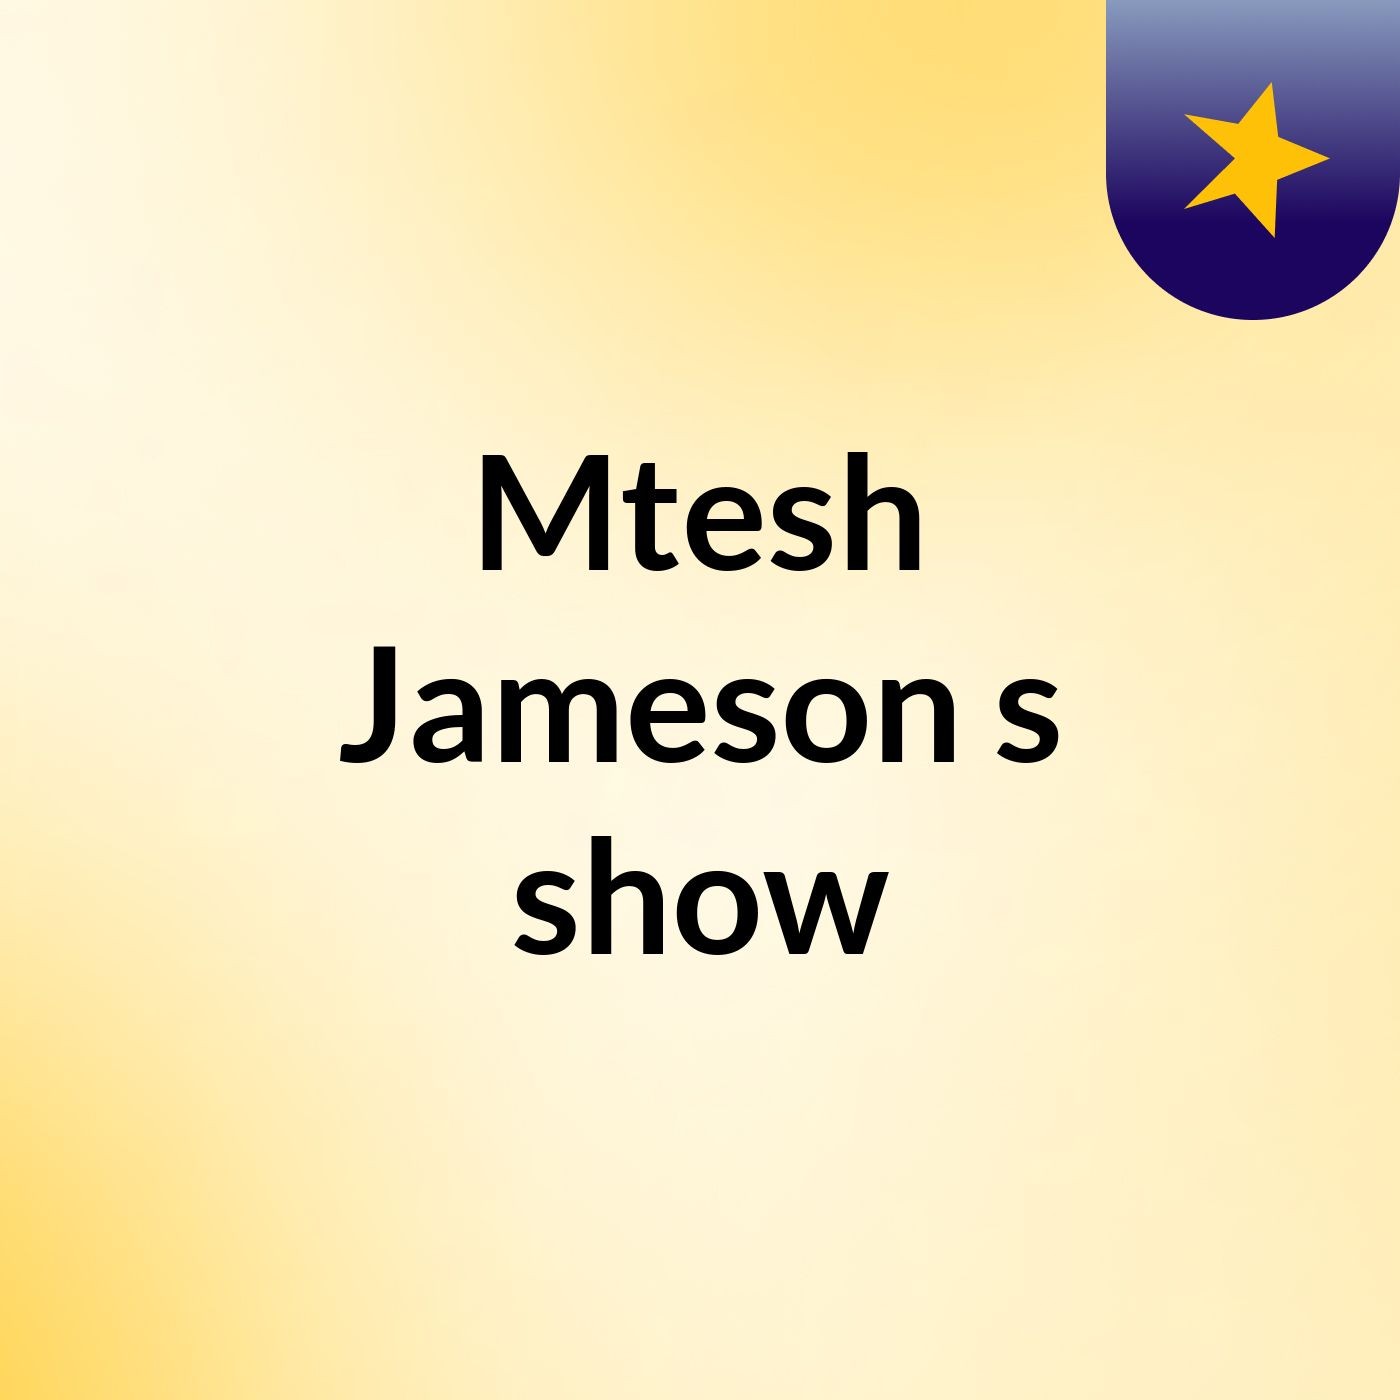 Mtesh Jameson's show